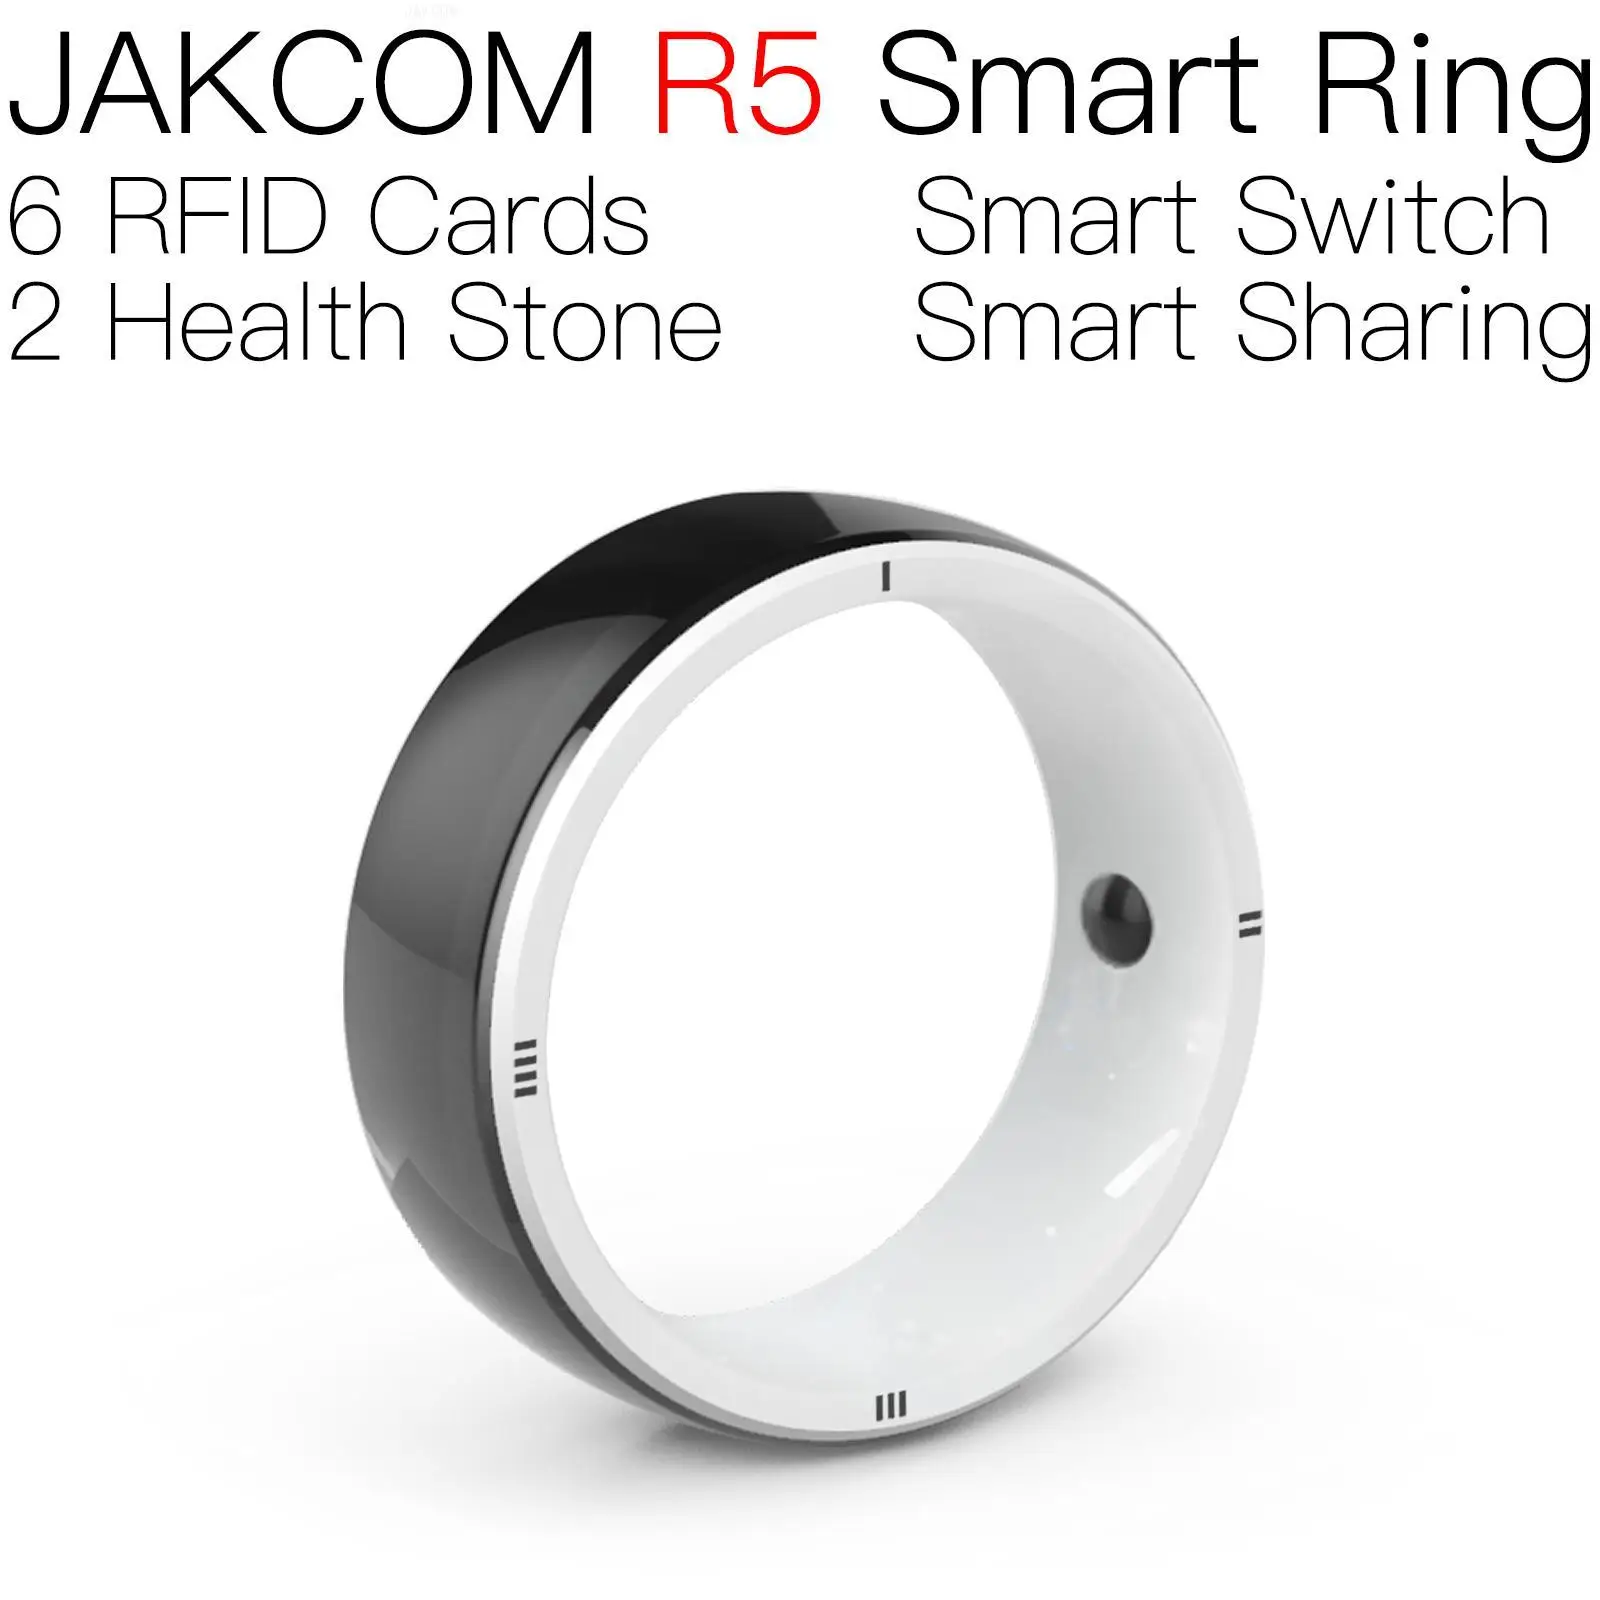 

JAKCOM R5 Smart Ring Super value than pvc cart printer uhf rfid tag activ ntag215 nfc 100pcs 125khz sticker dog microchip